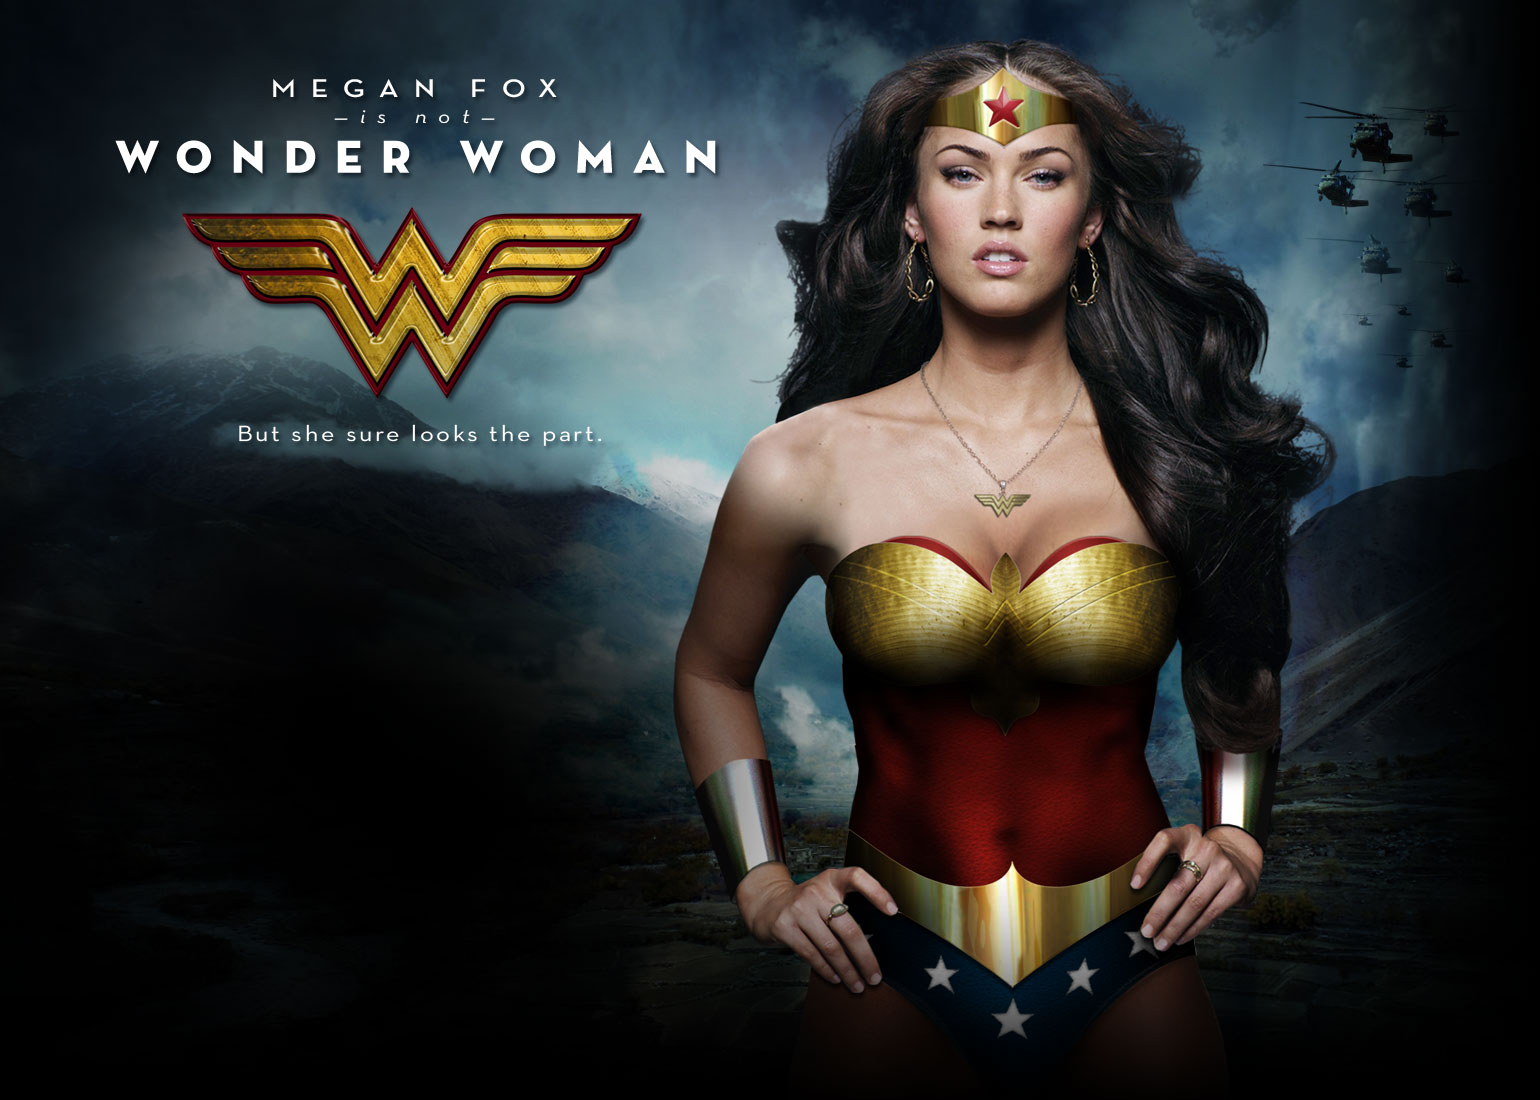 Megan Fox as Wonder Woman Movie